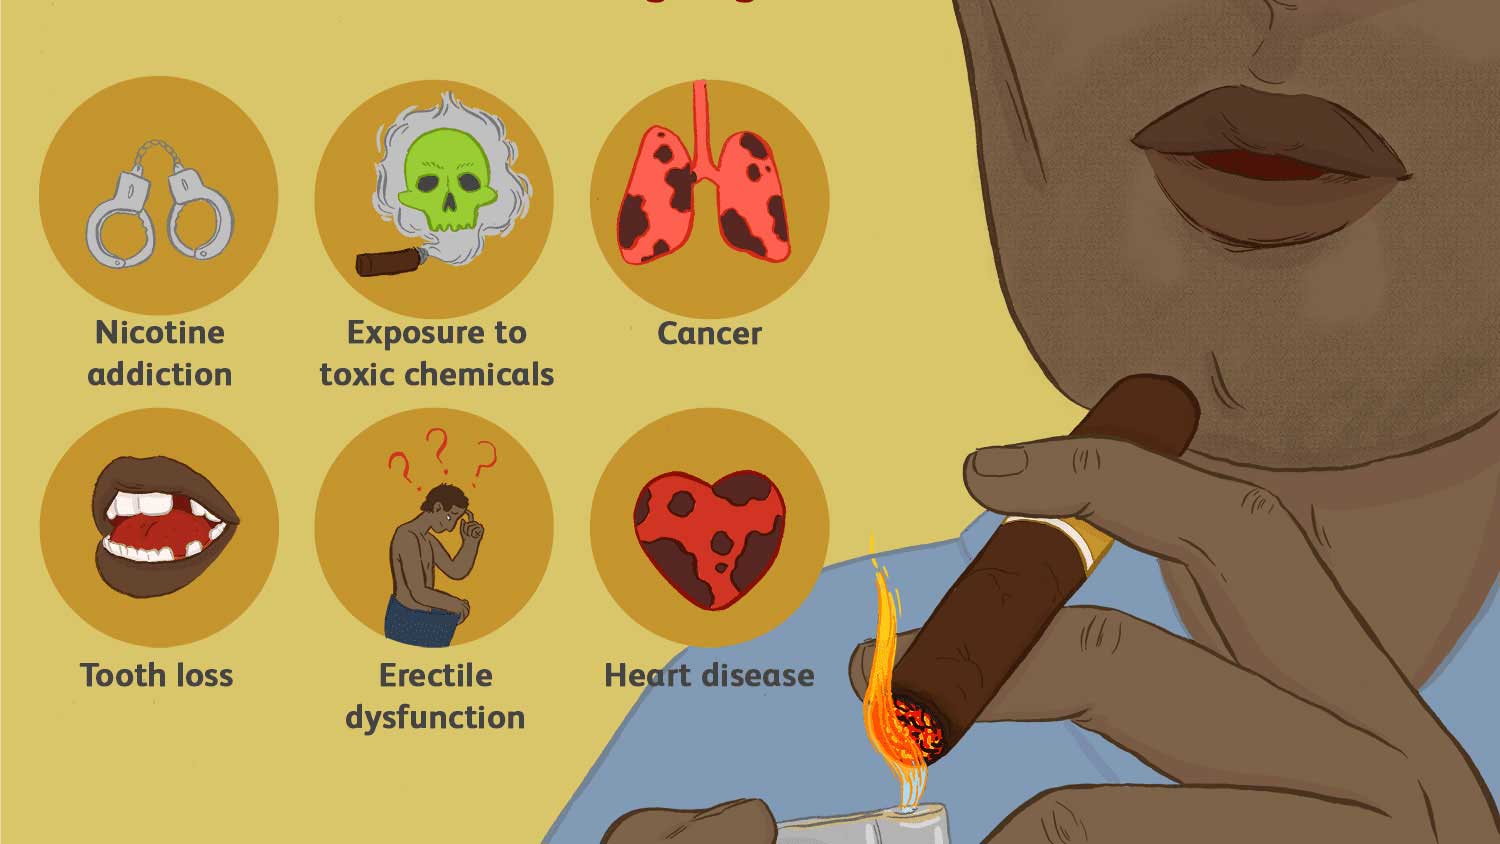 Effect of Nicotine on Heart